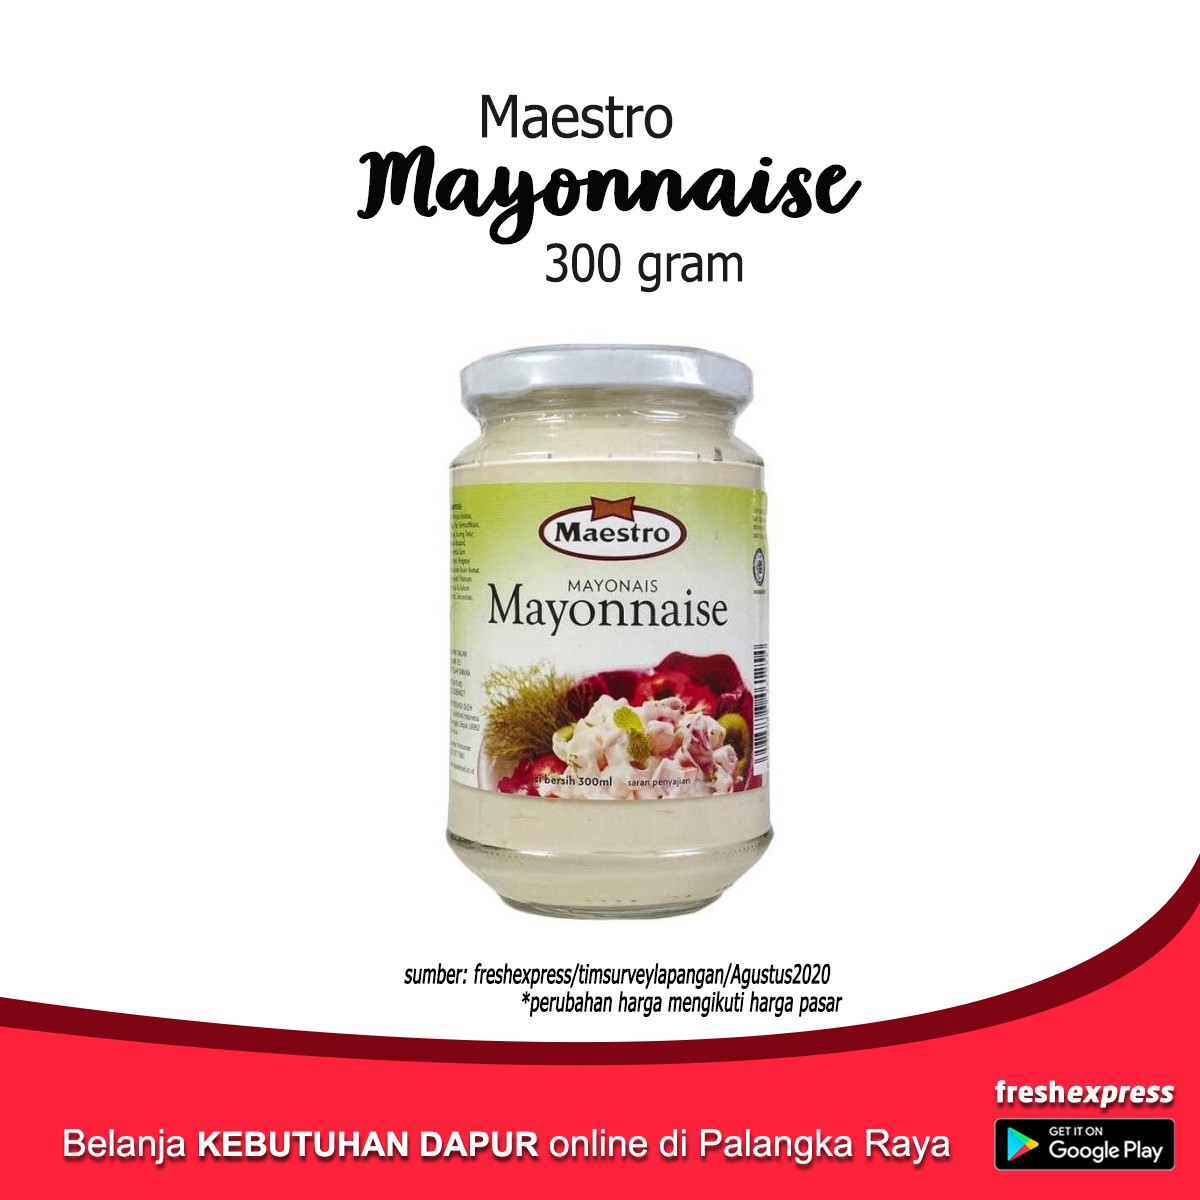 Maestro Mayonnaise 300 Gram